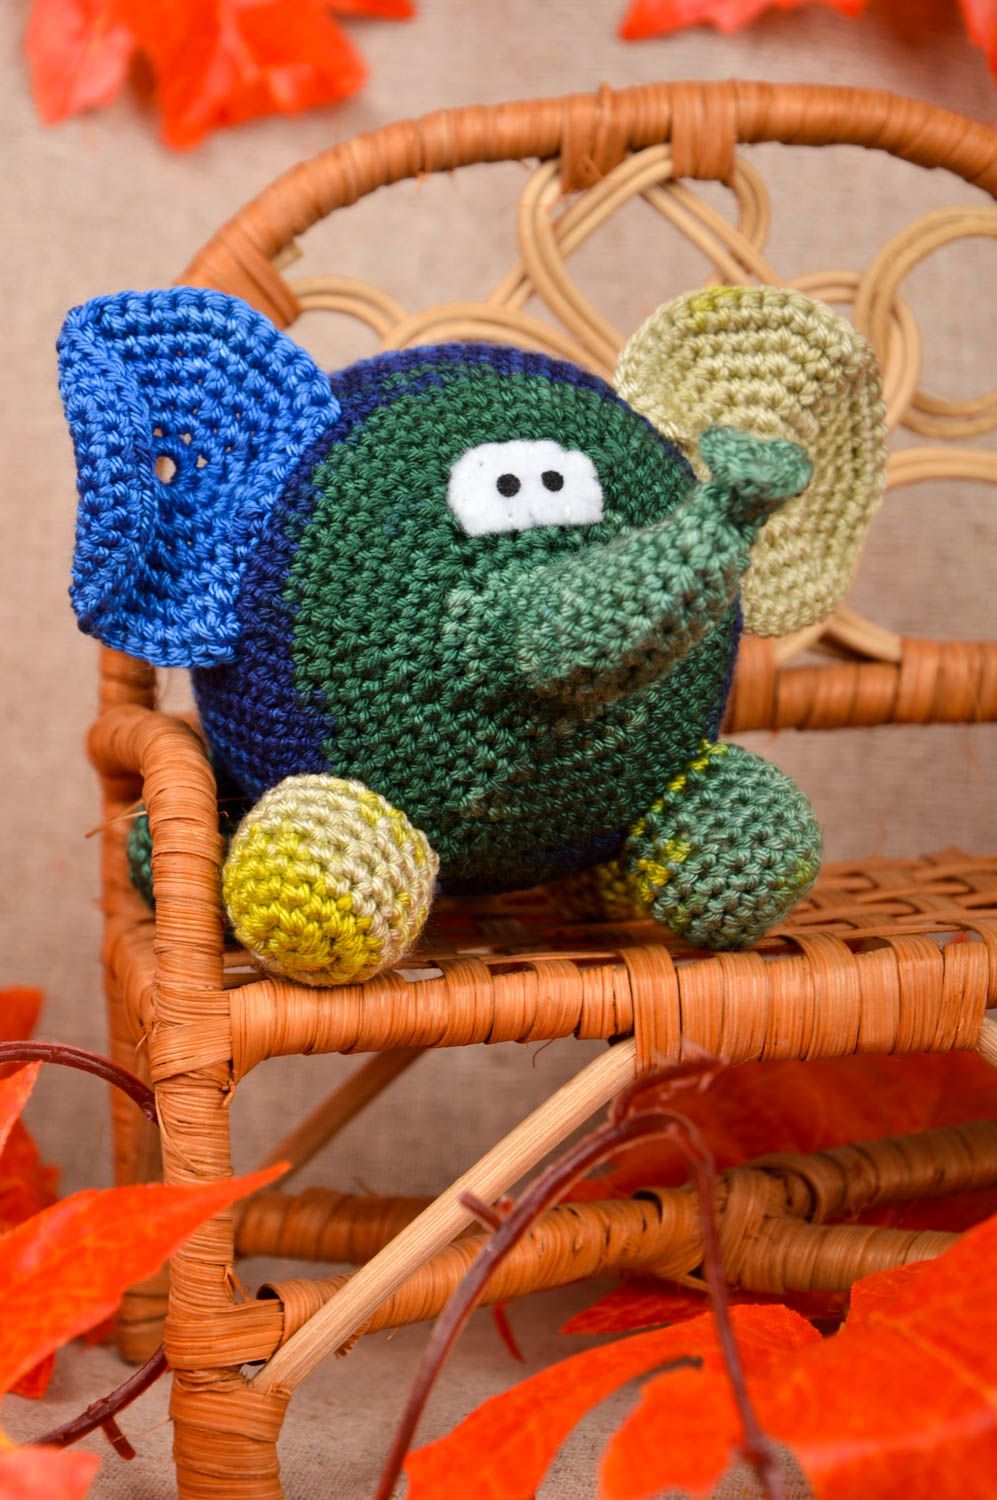 Unusual handmade crochet toy soft childrens toys interior decorating gift ideas photo 1